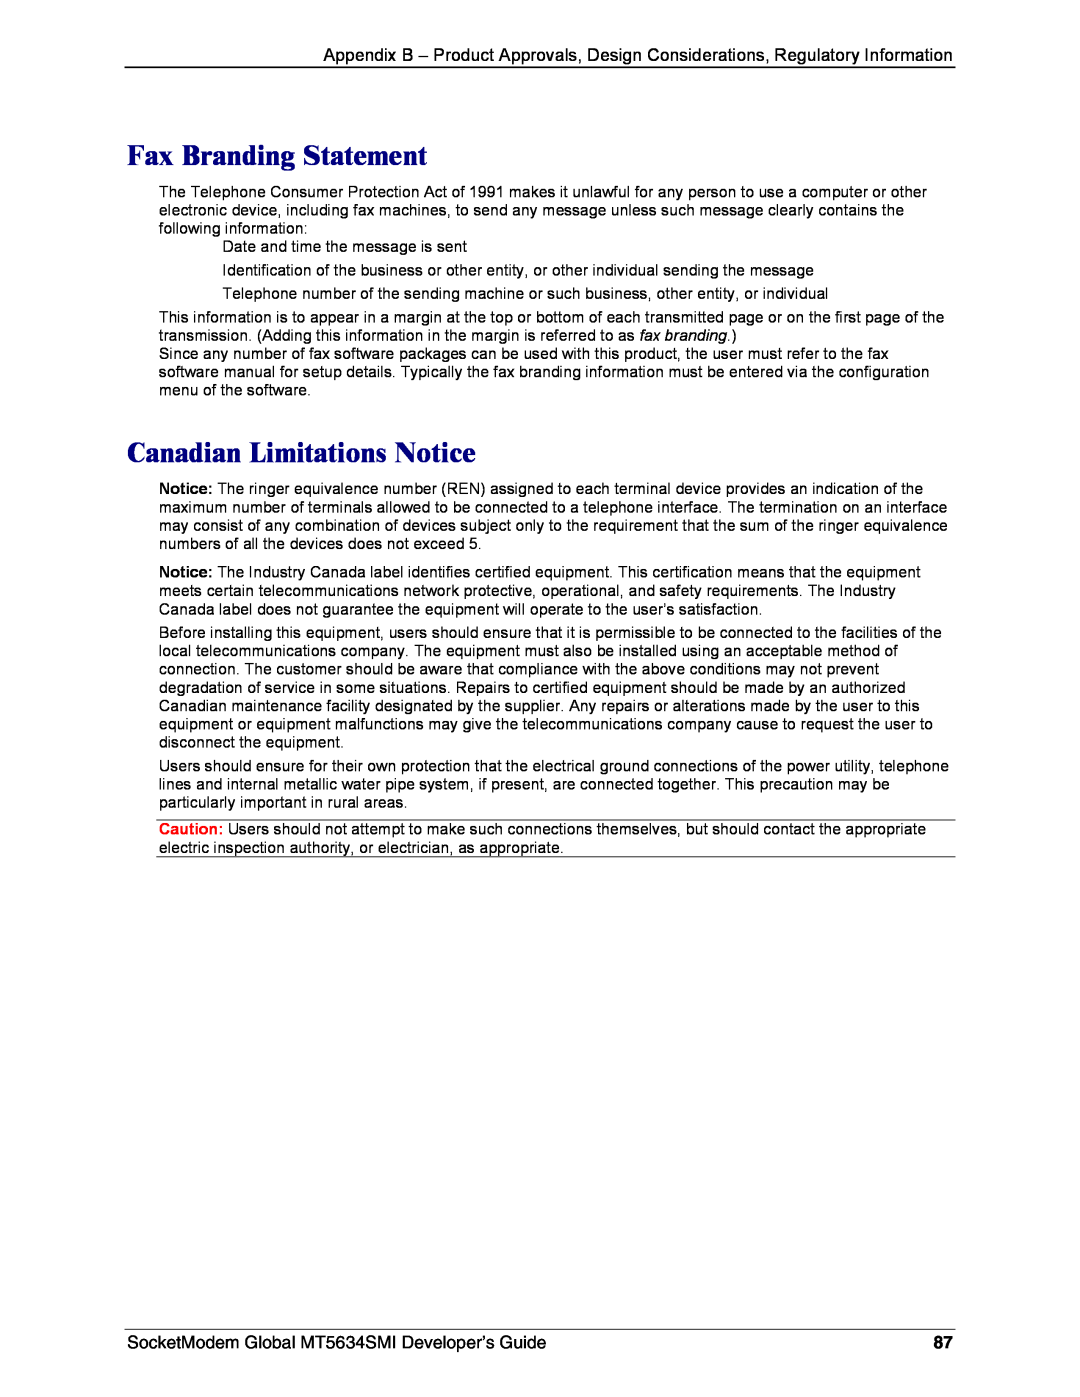 Technics MT5634SMI-34 Fax Branding Statement, Canadian Limitations Notice, SocketModem Global MT5634SMI Developer’s Guide 